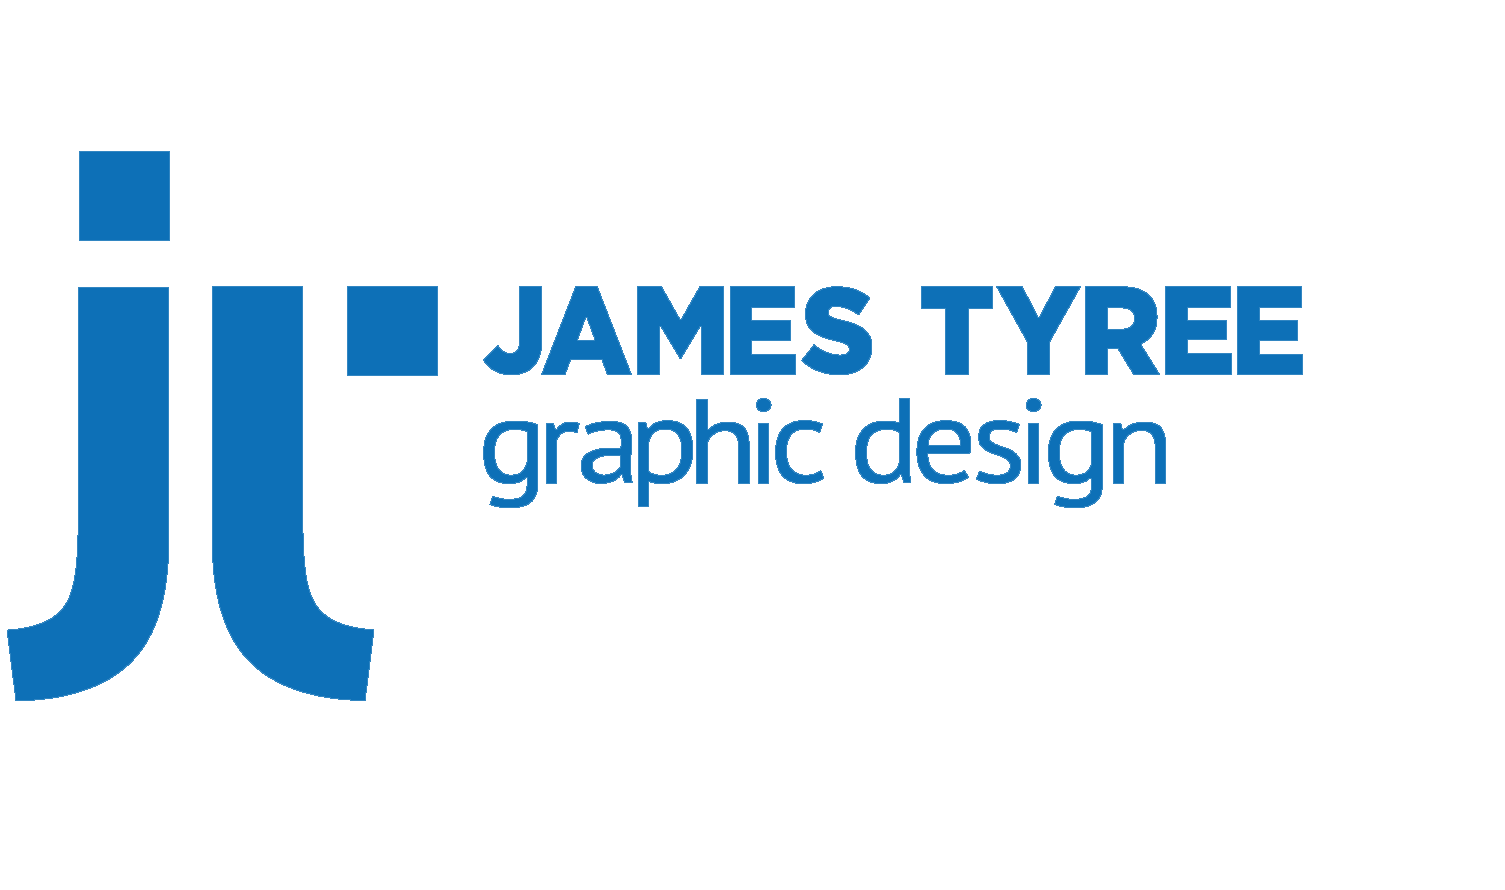 James Tyree